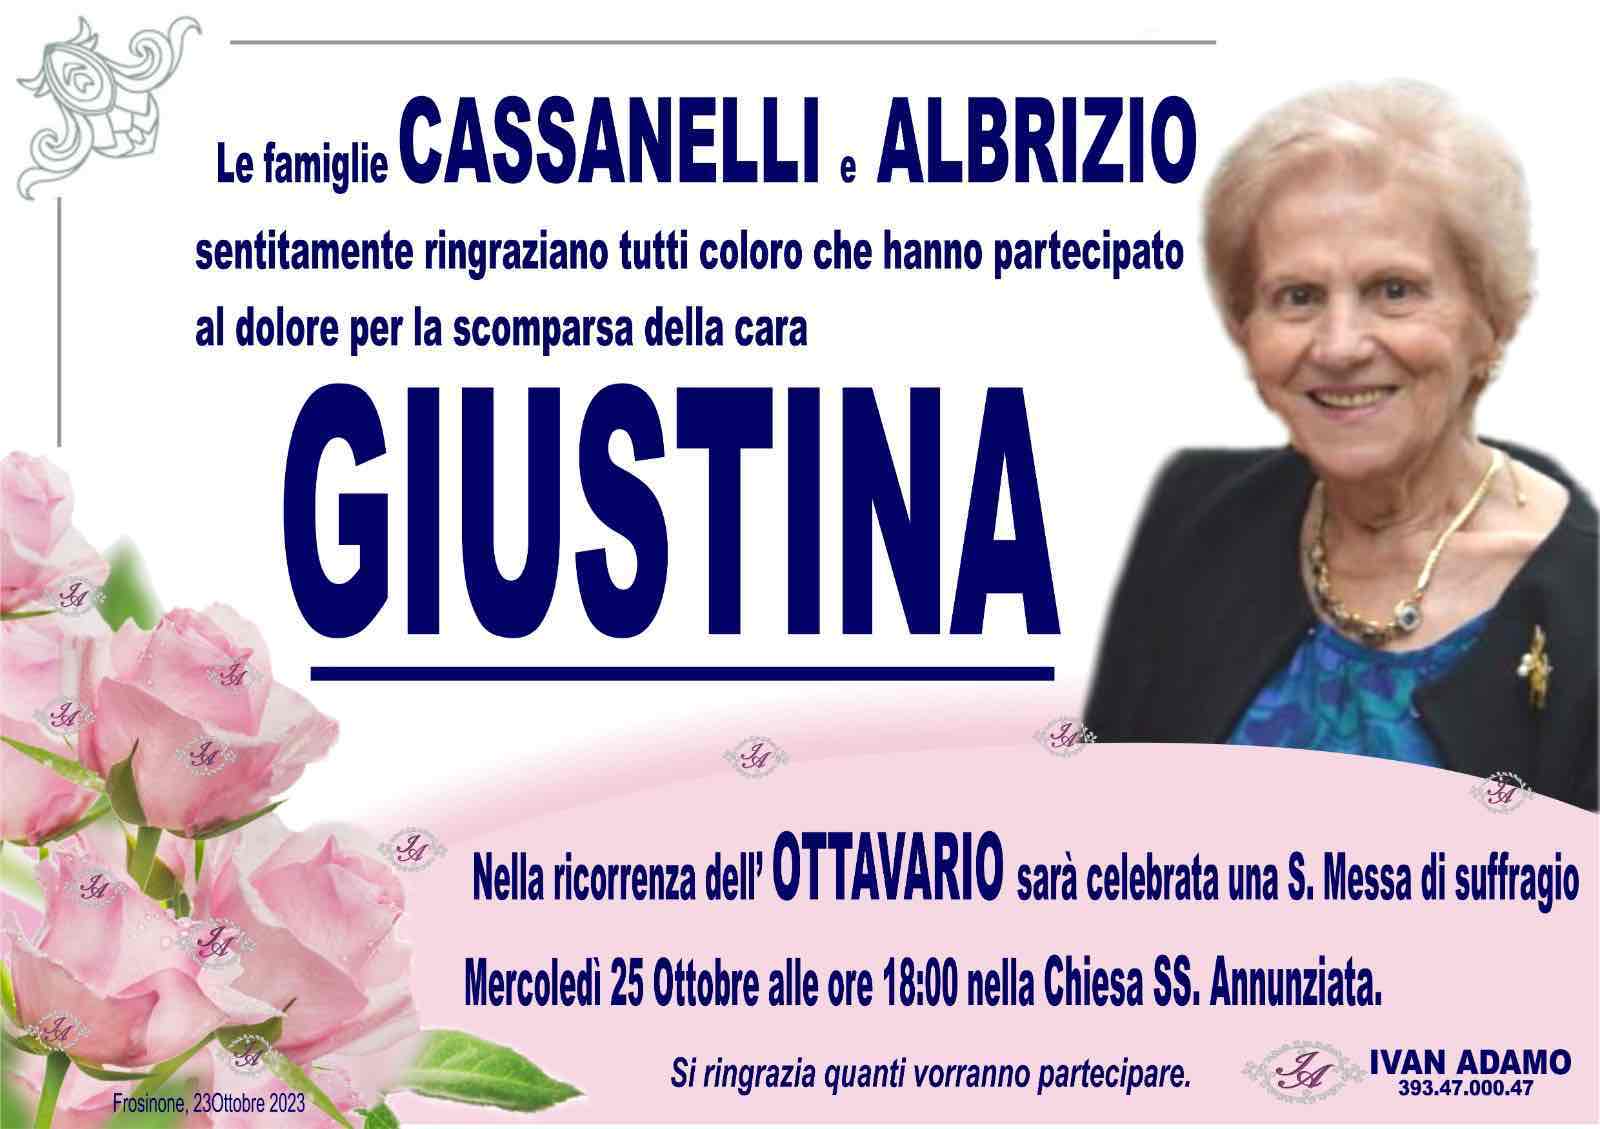 Giustina Albrizio